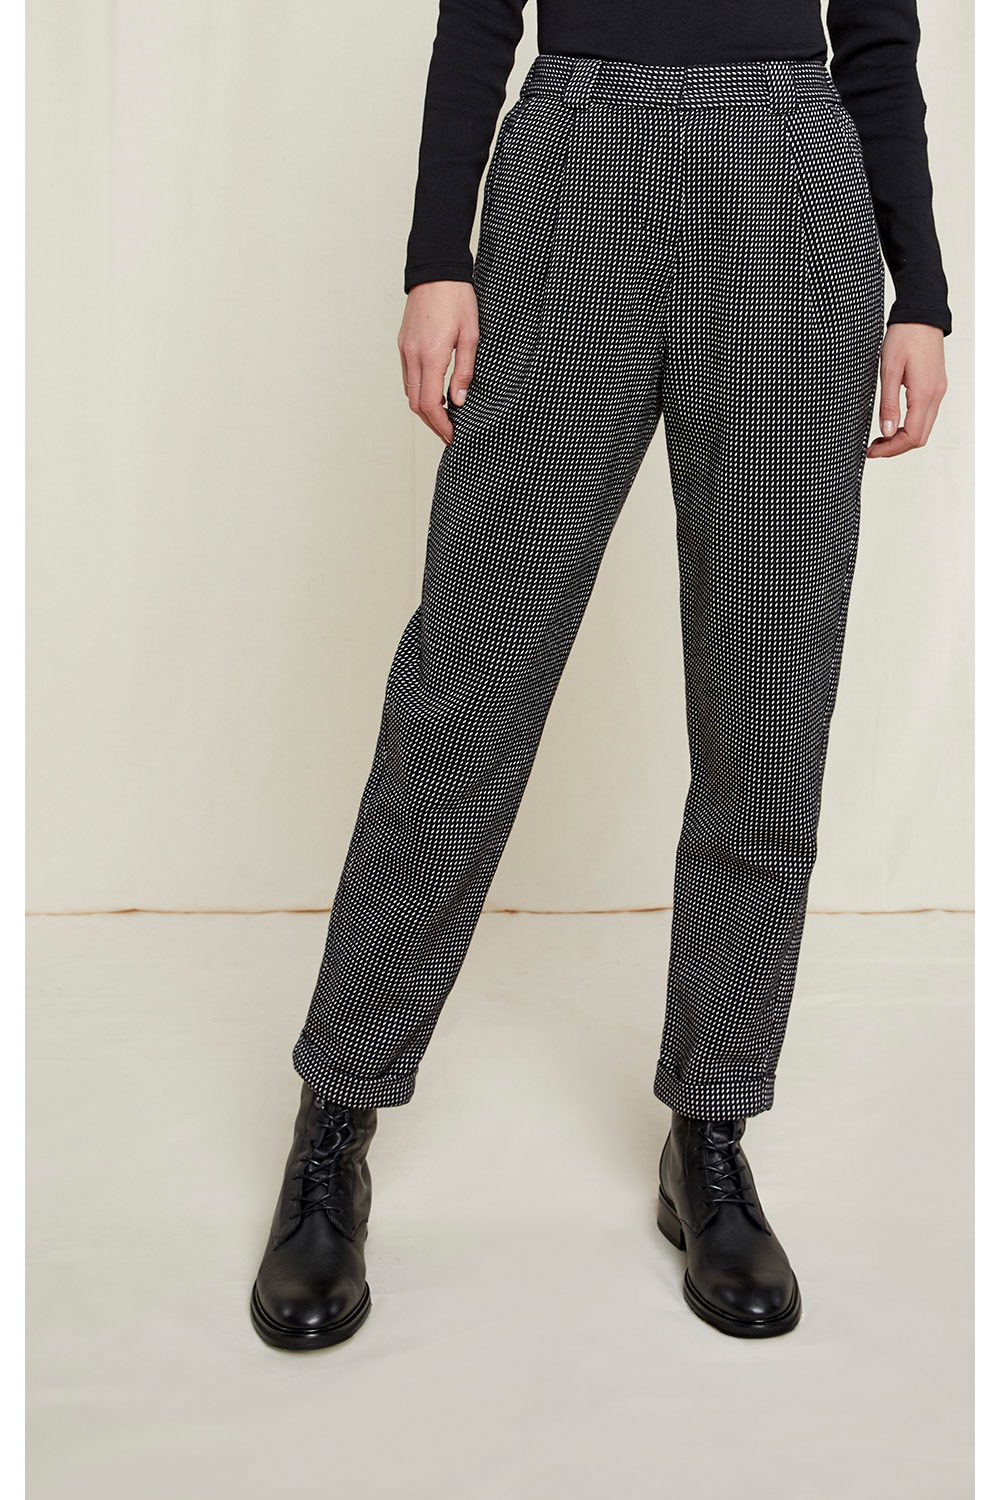 fionn-trousers-in-black-ab6e54f52c31